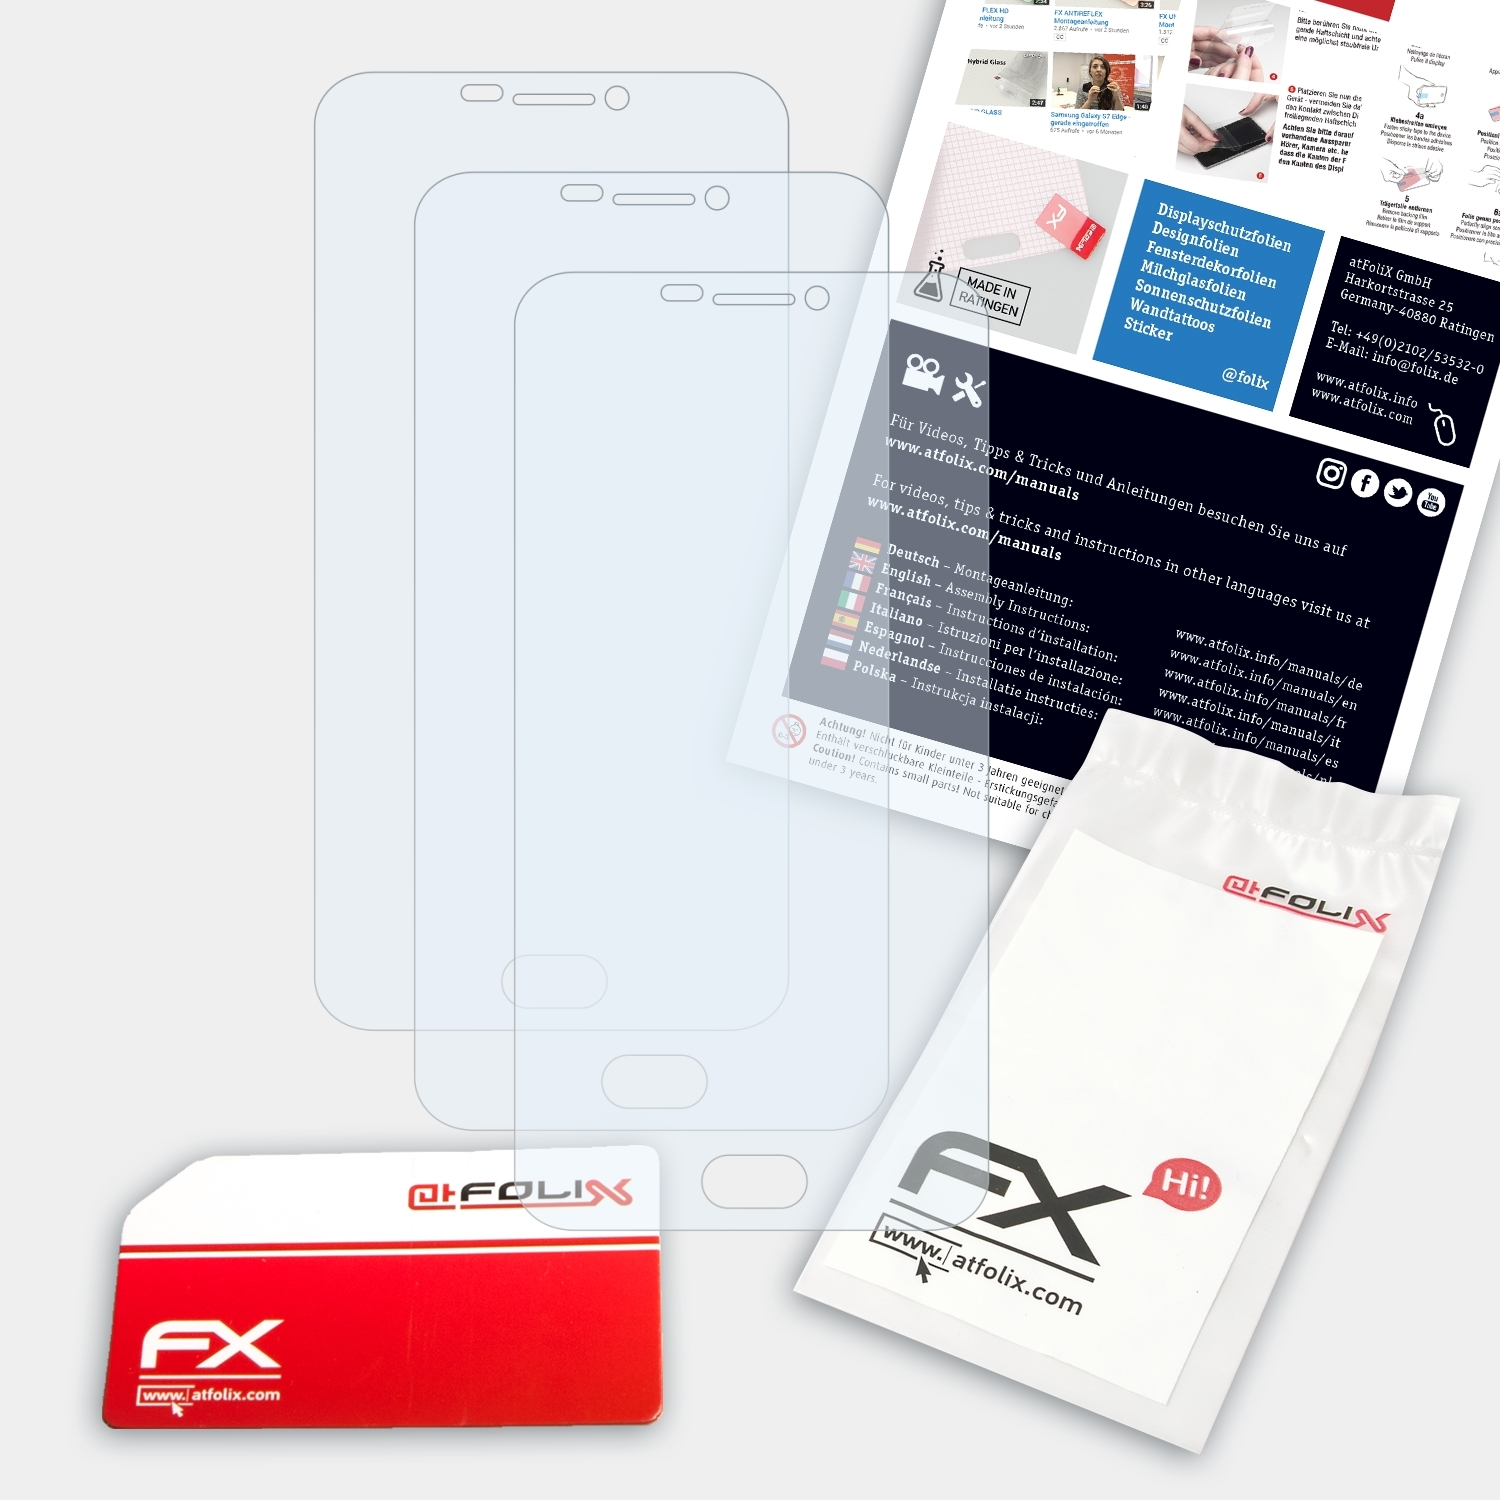 ATFOLIX 3x 500) Displayschutz(für Quantum 3 FX-Clear GoClever